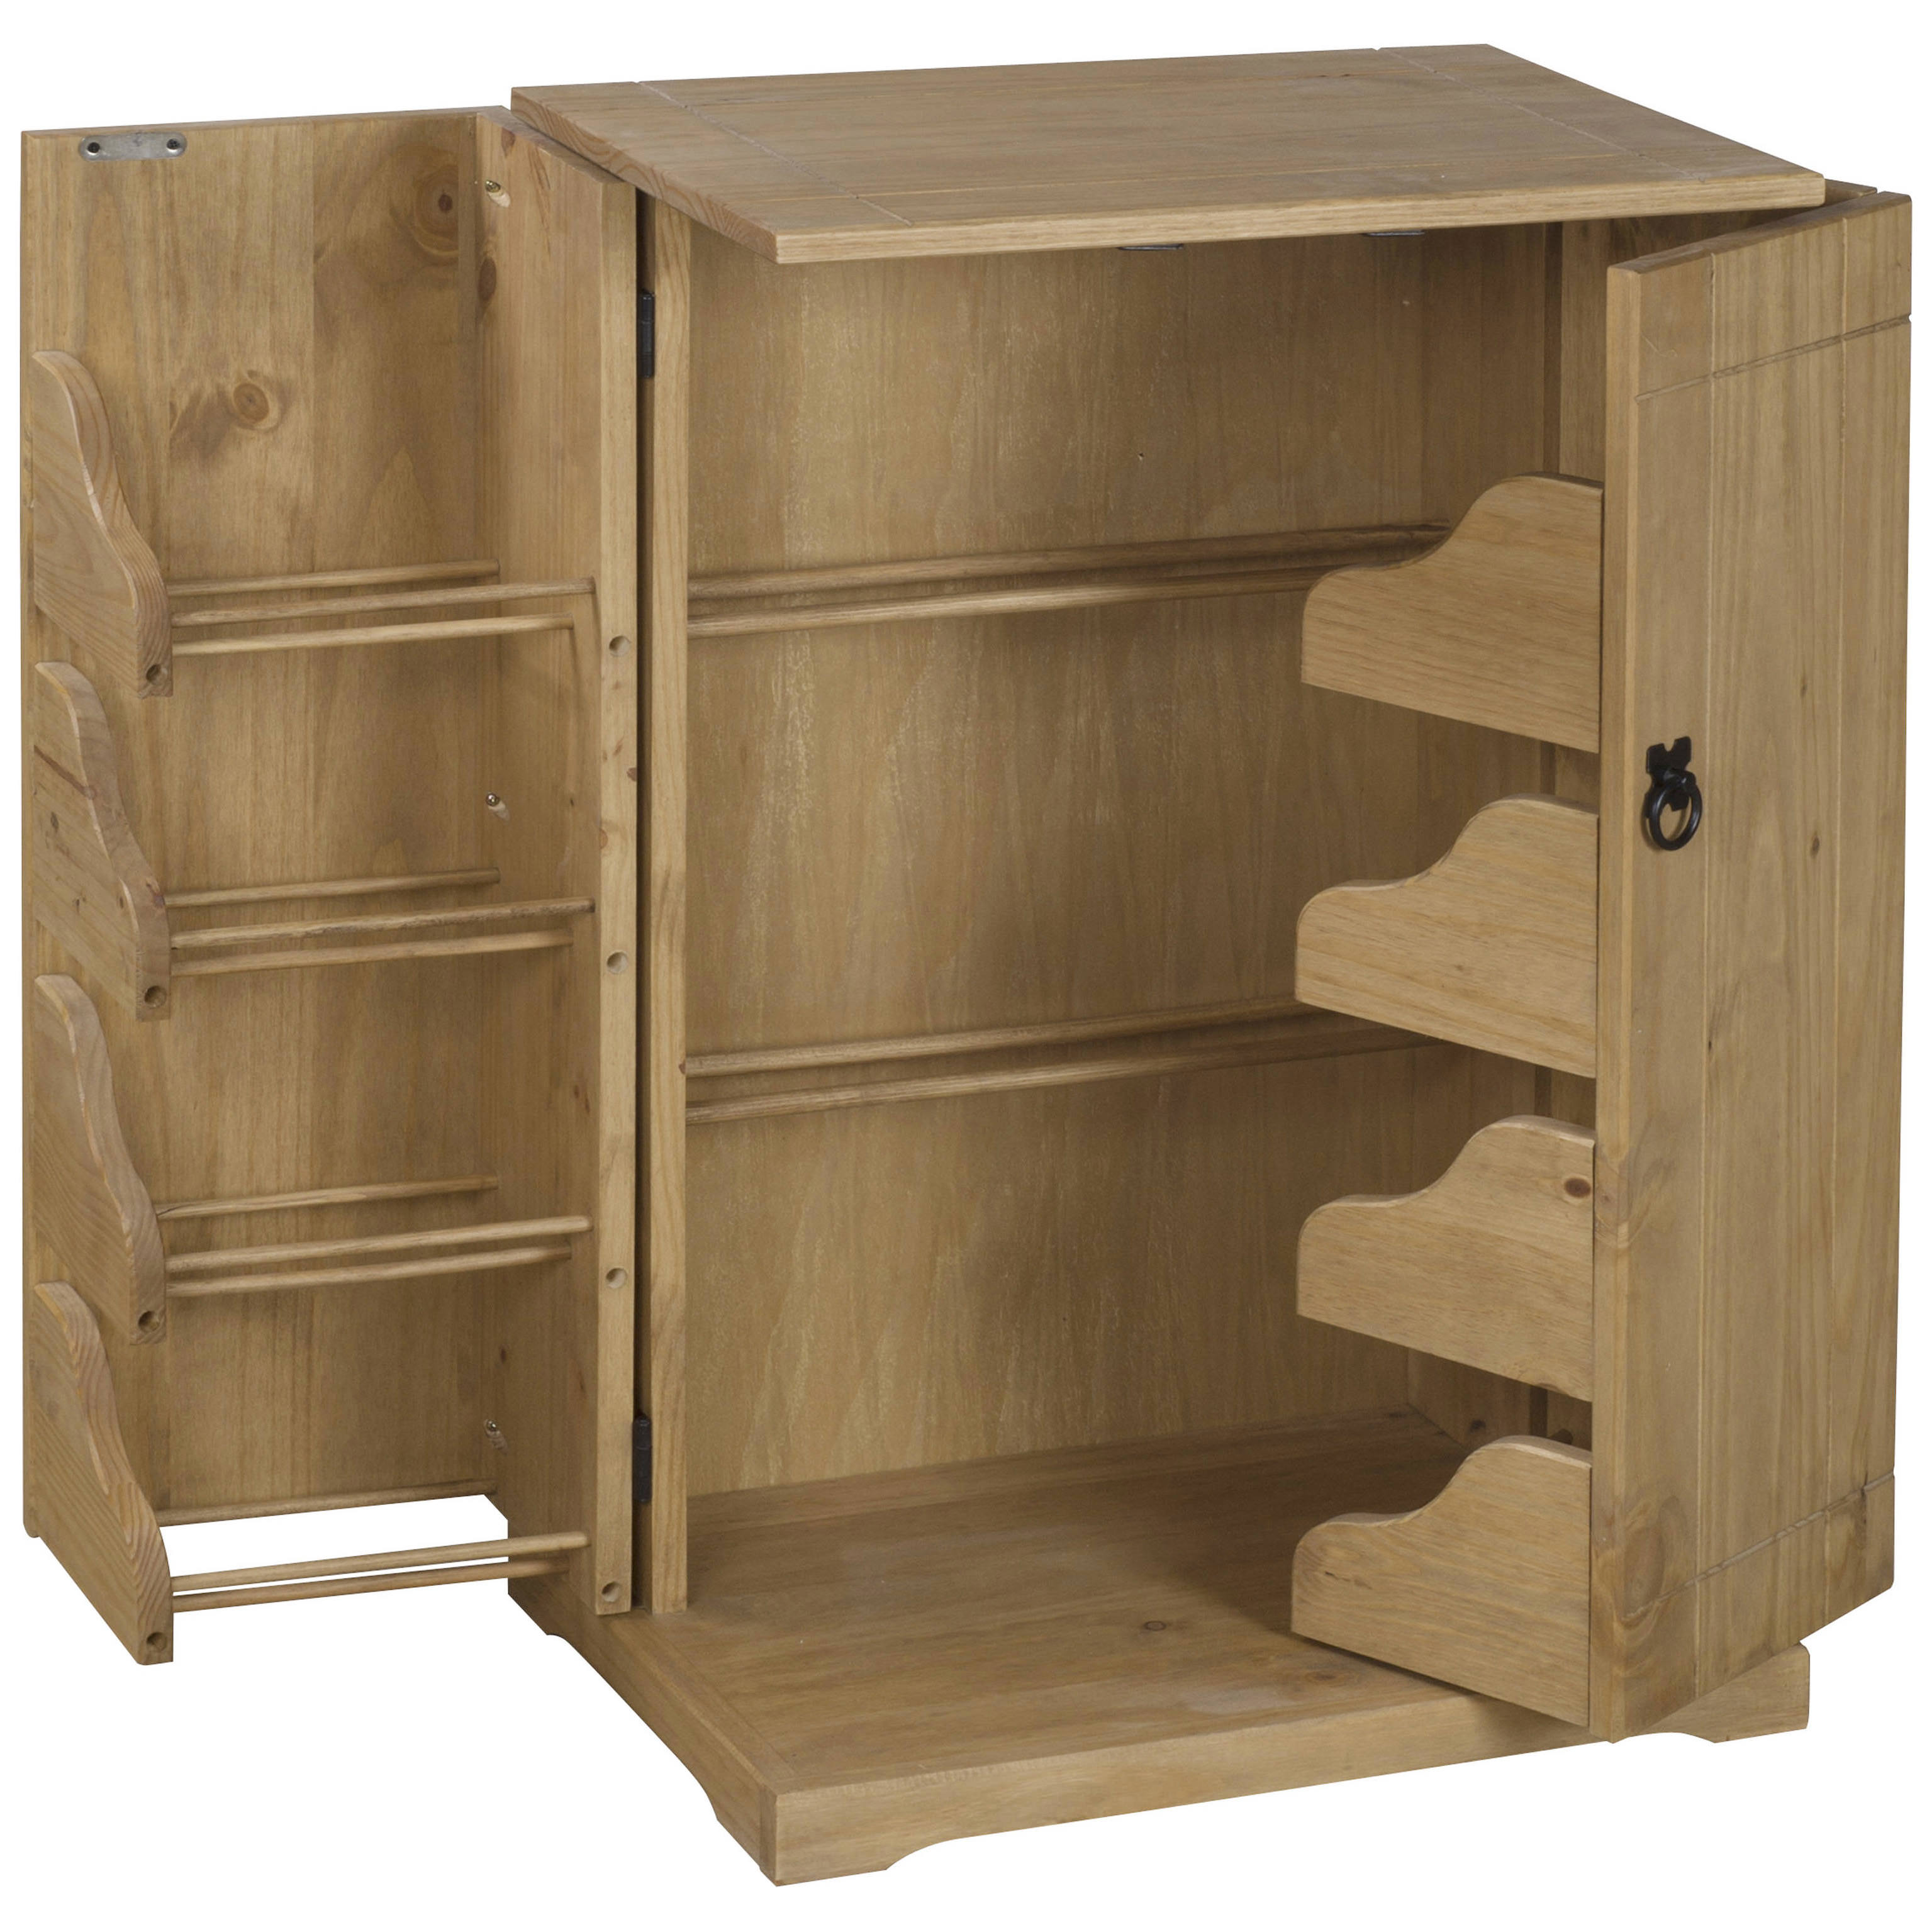 Solid Pine Cd Dvd Media Storage Cupboard Cabinet Rack Unit